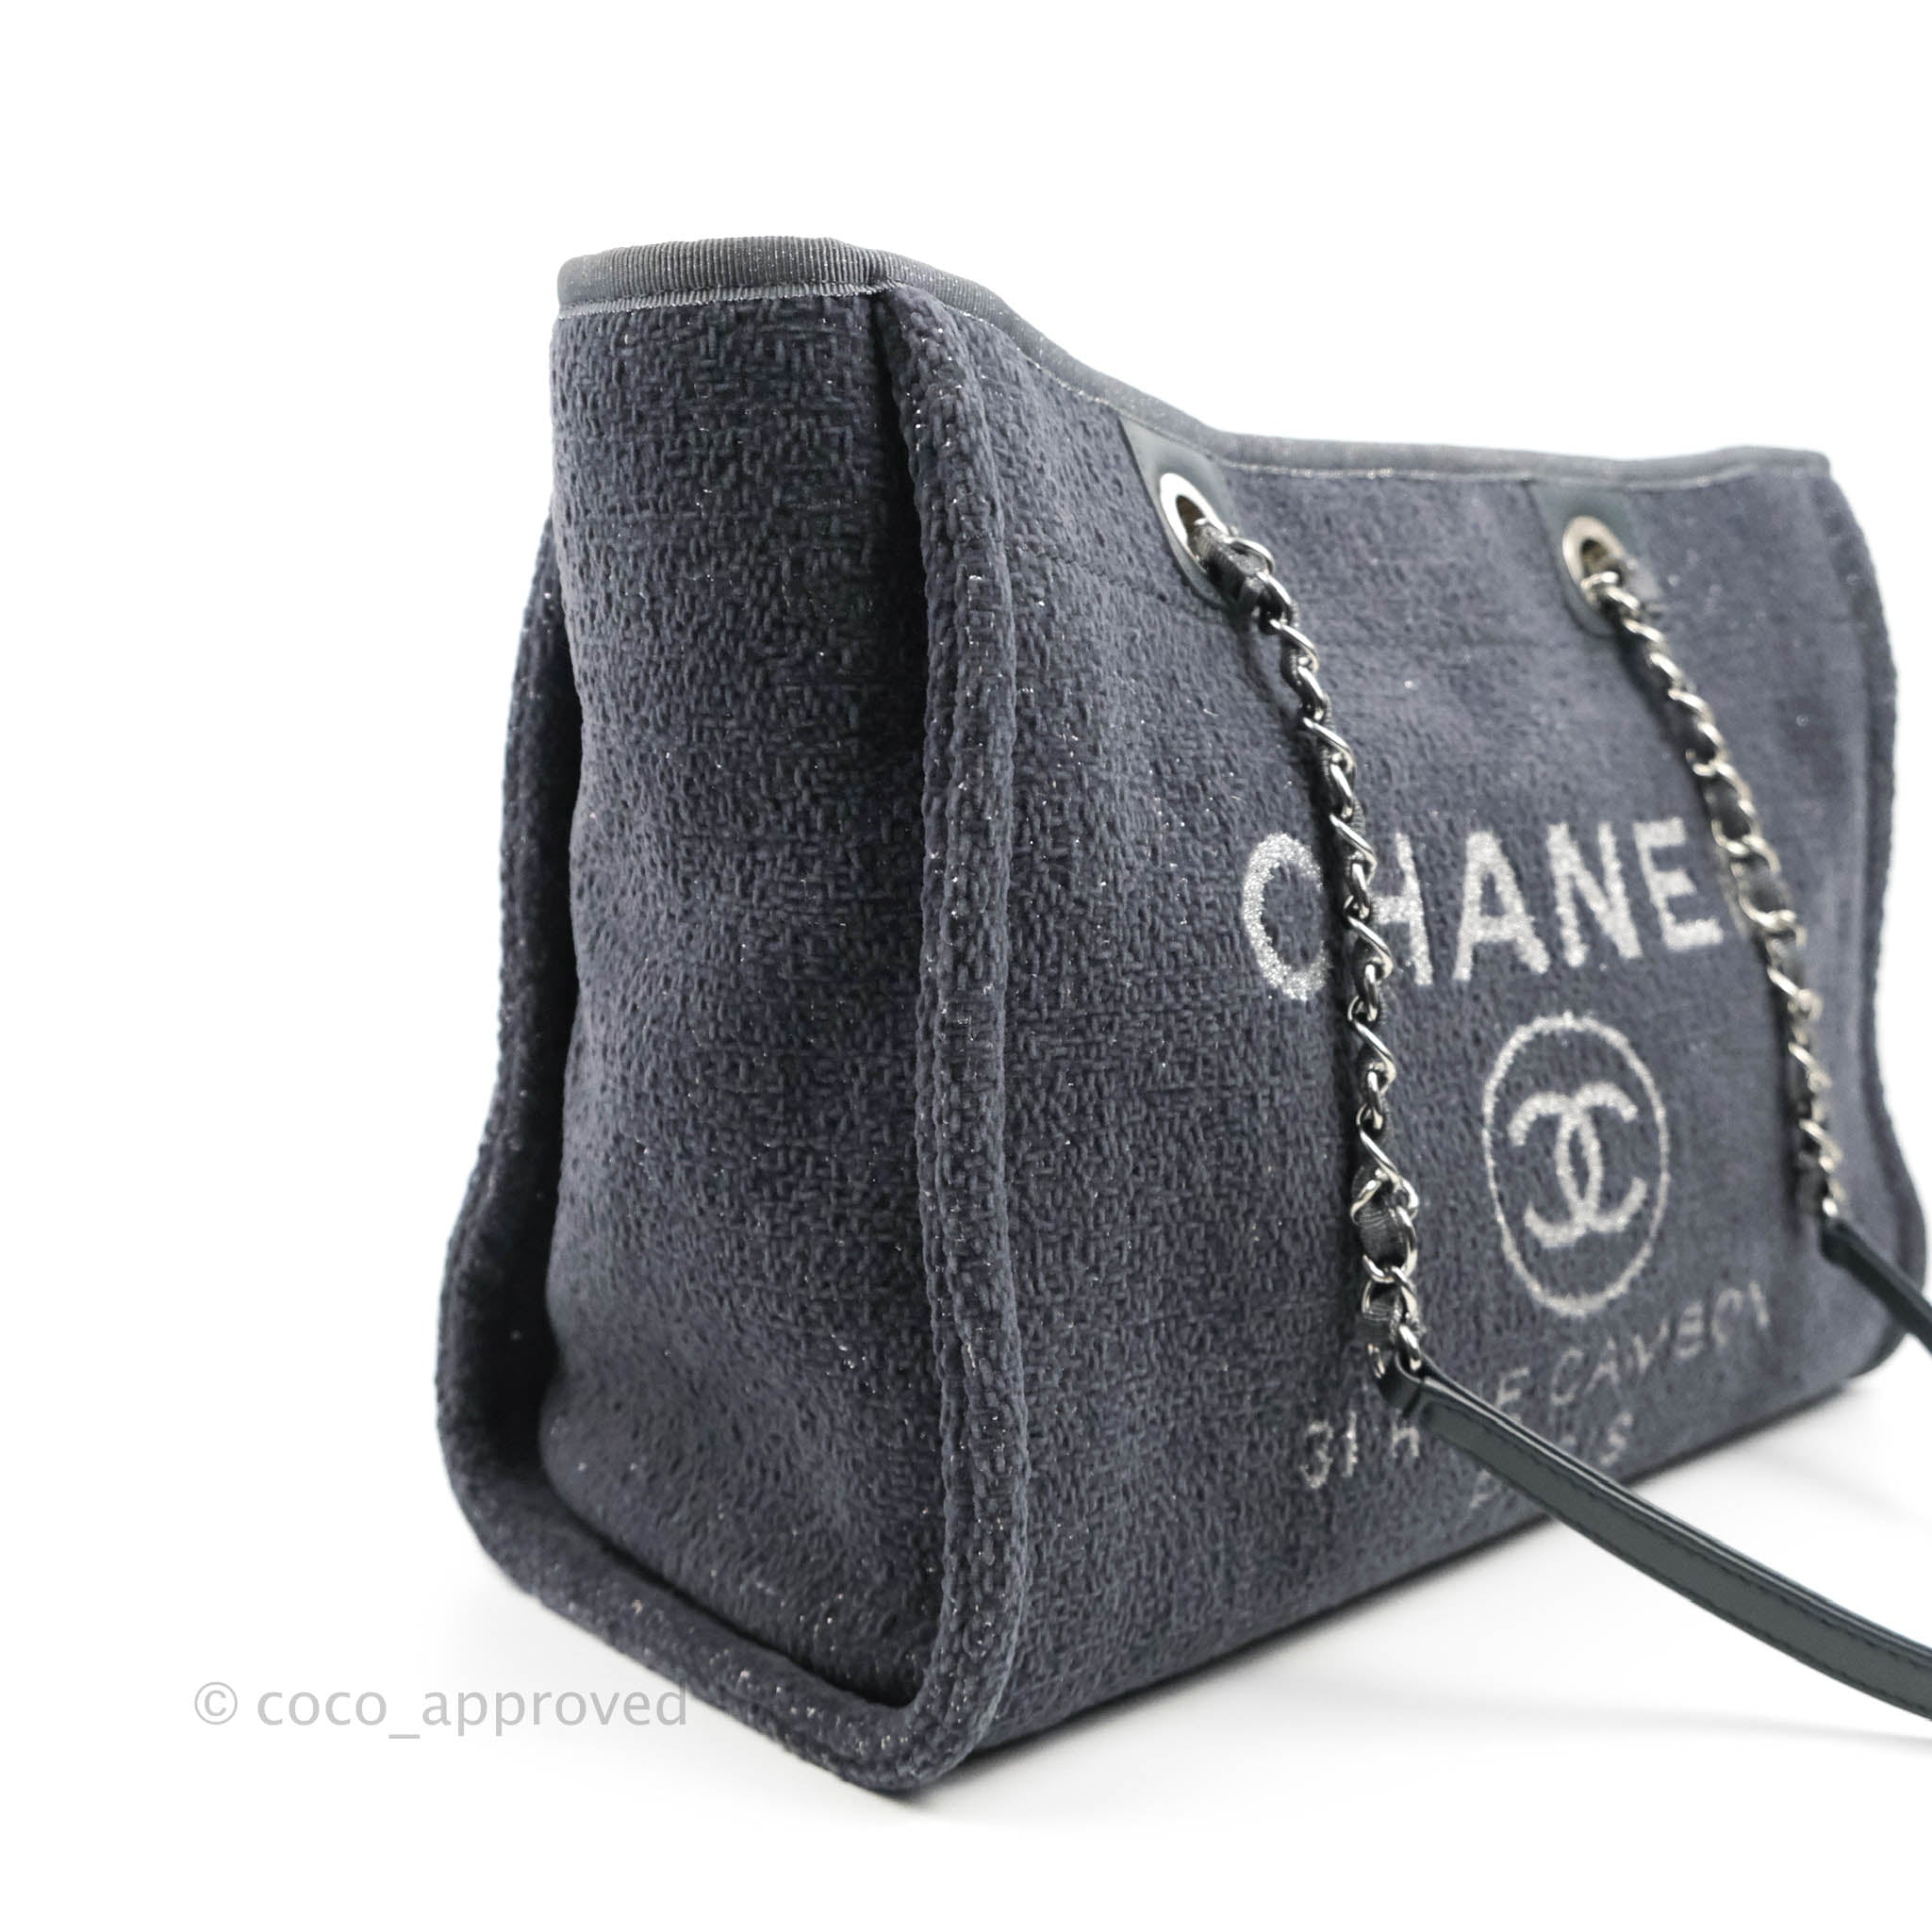 Chanel Grey Fabric Medium Deauville Tote